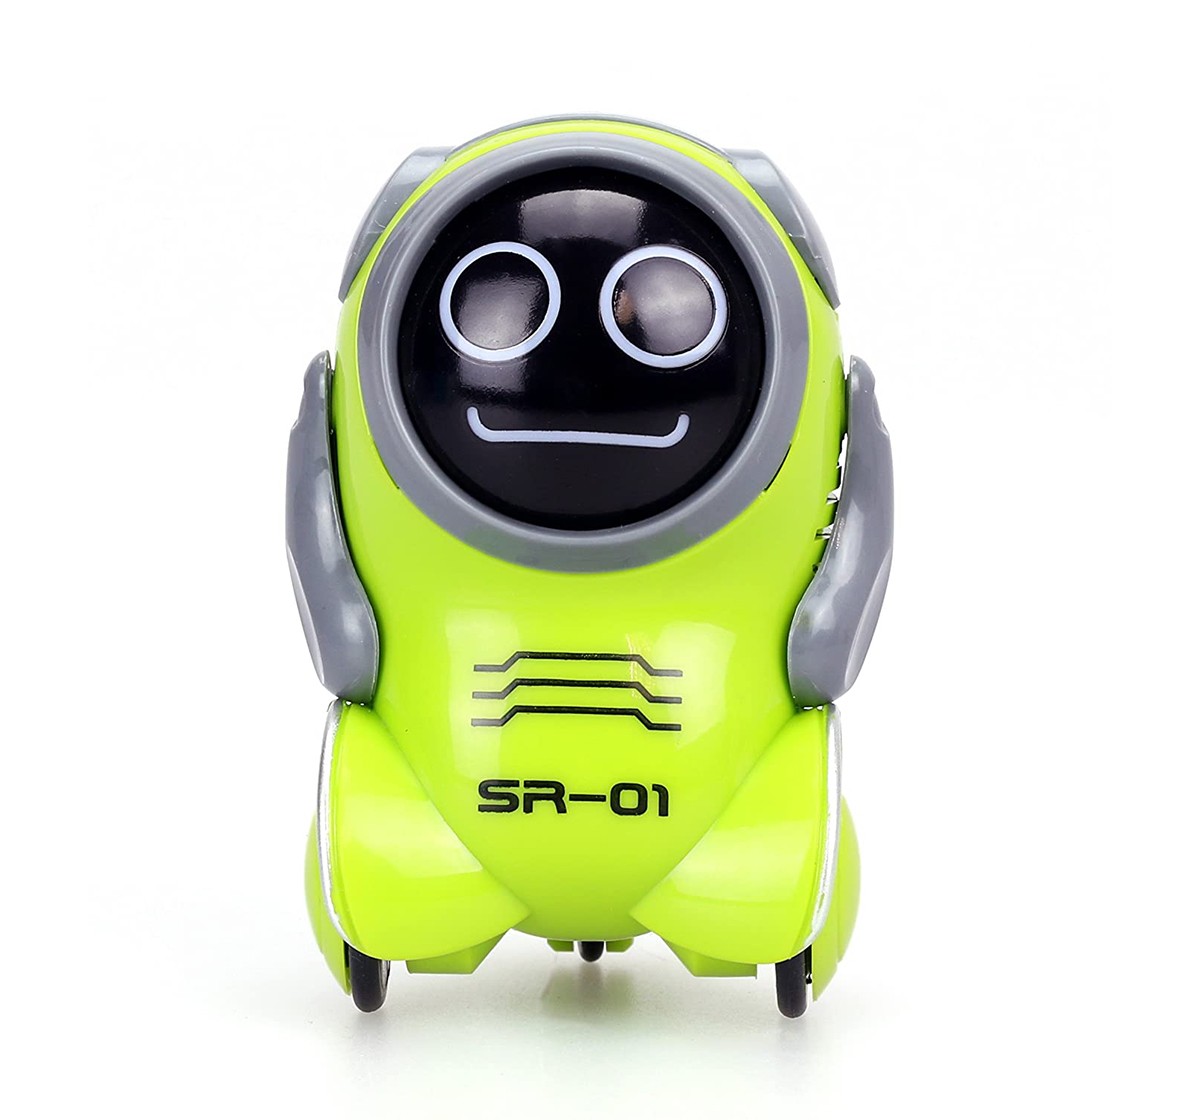 Silverlit Pokibot In 3 Colors-White/Orange/Green Robotics for Kids age 3Y+ 